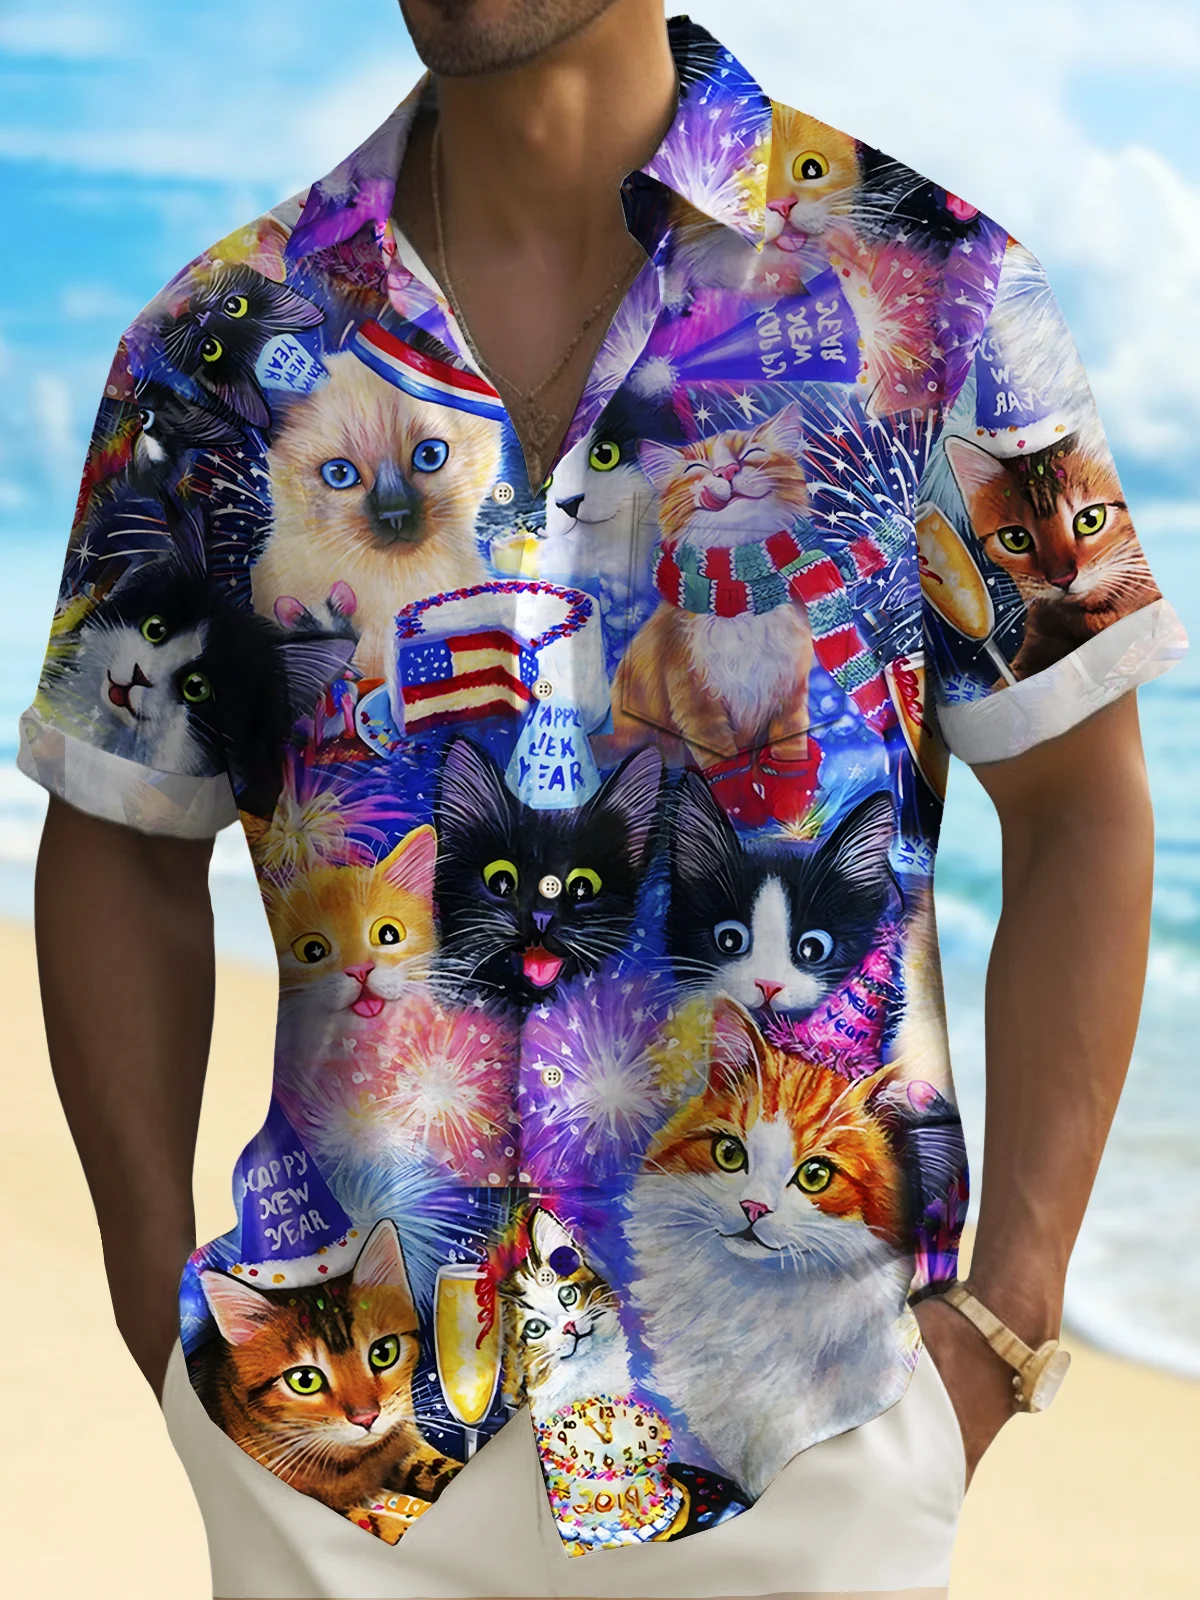 Royaura New Year Fireworks Men's Hawaiian Shirts Cute Cat Cartoon Stretch Easy Care Camp Pocket Shirts Big Tall